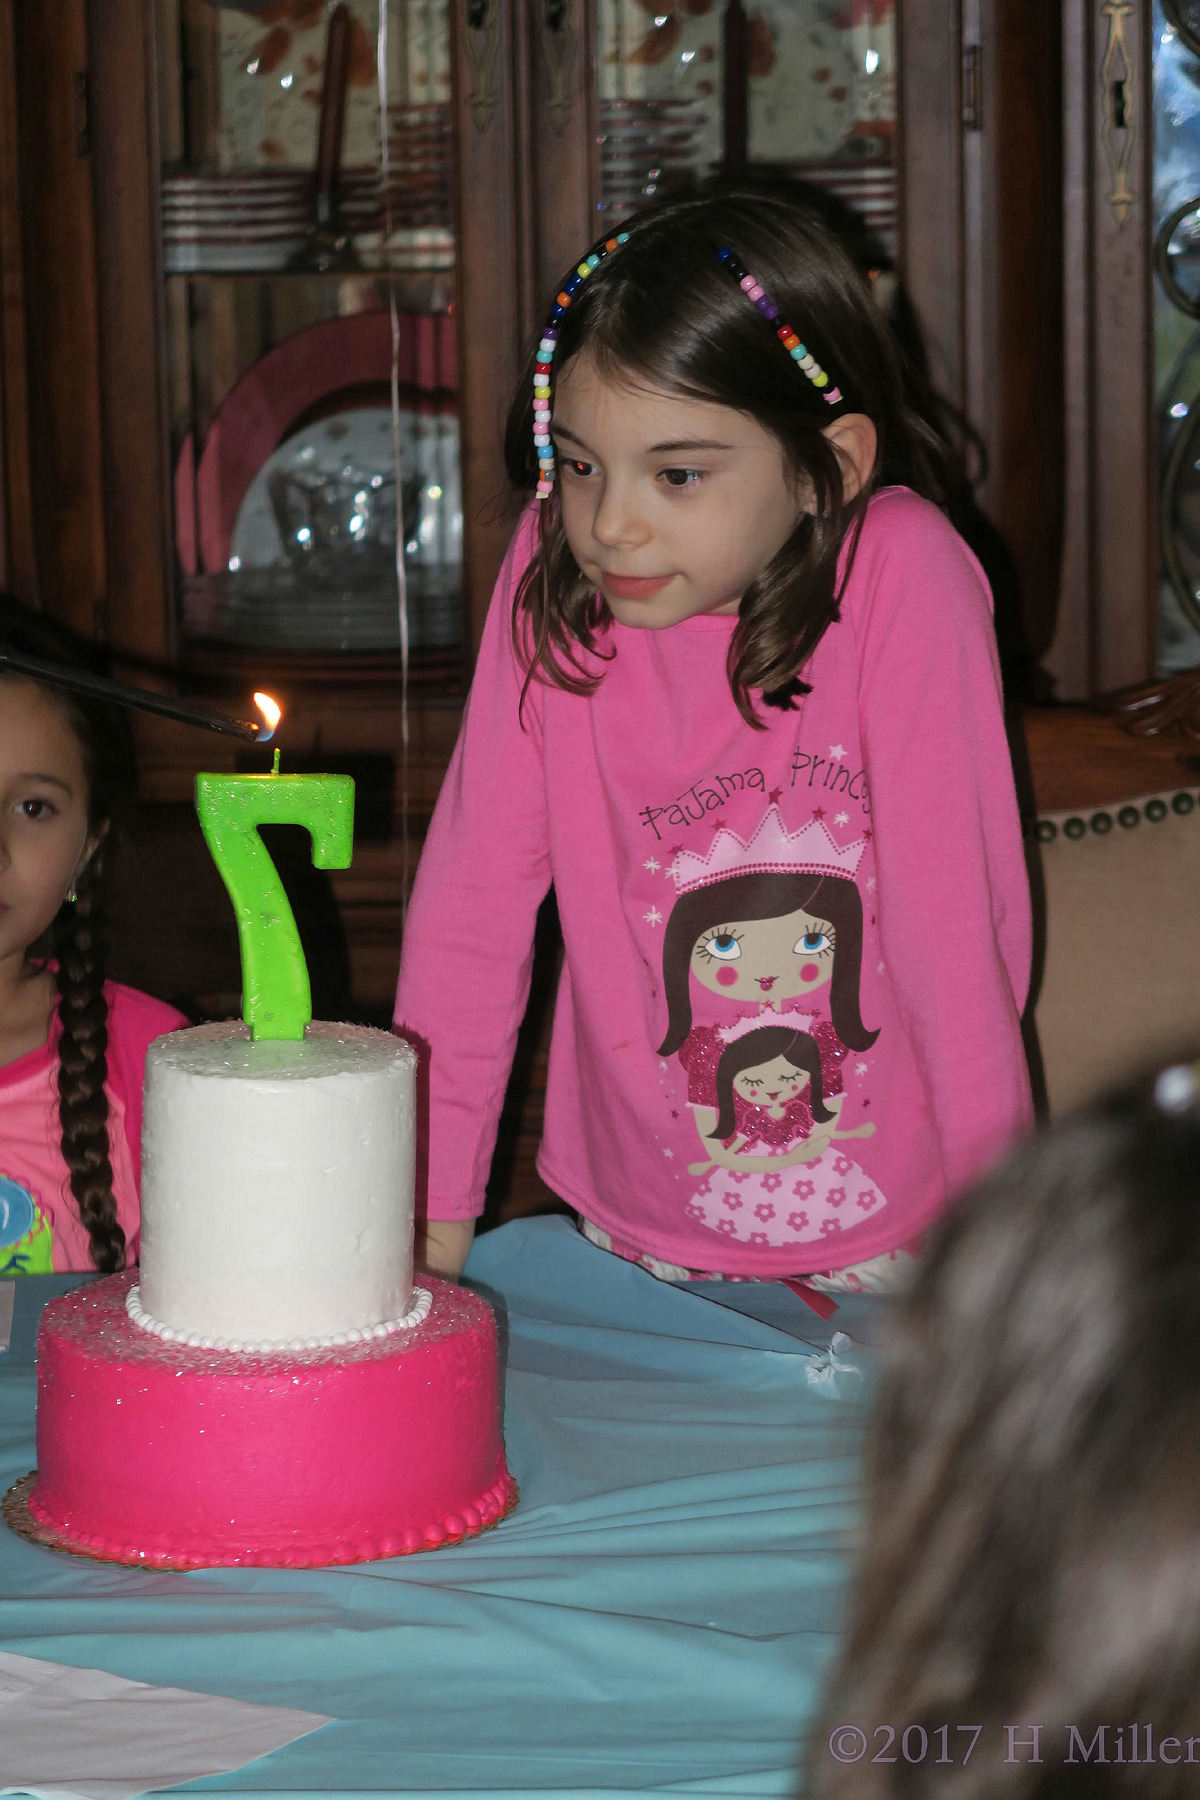 The Birthday Girl Loves Her Pretty Spa Themed Birthday Cake 1